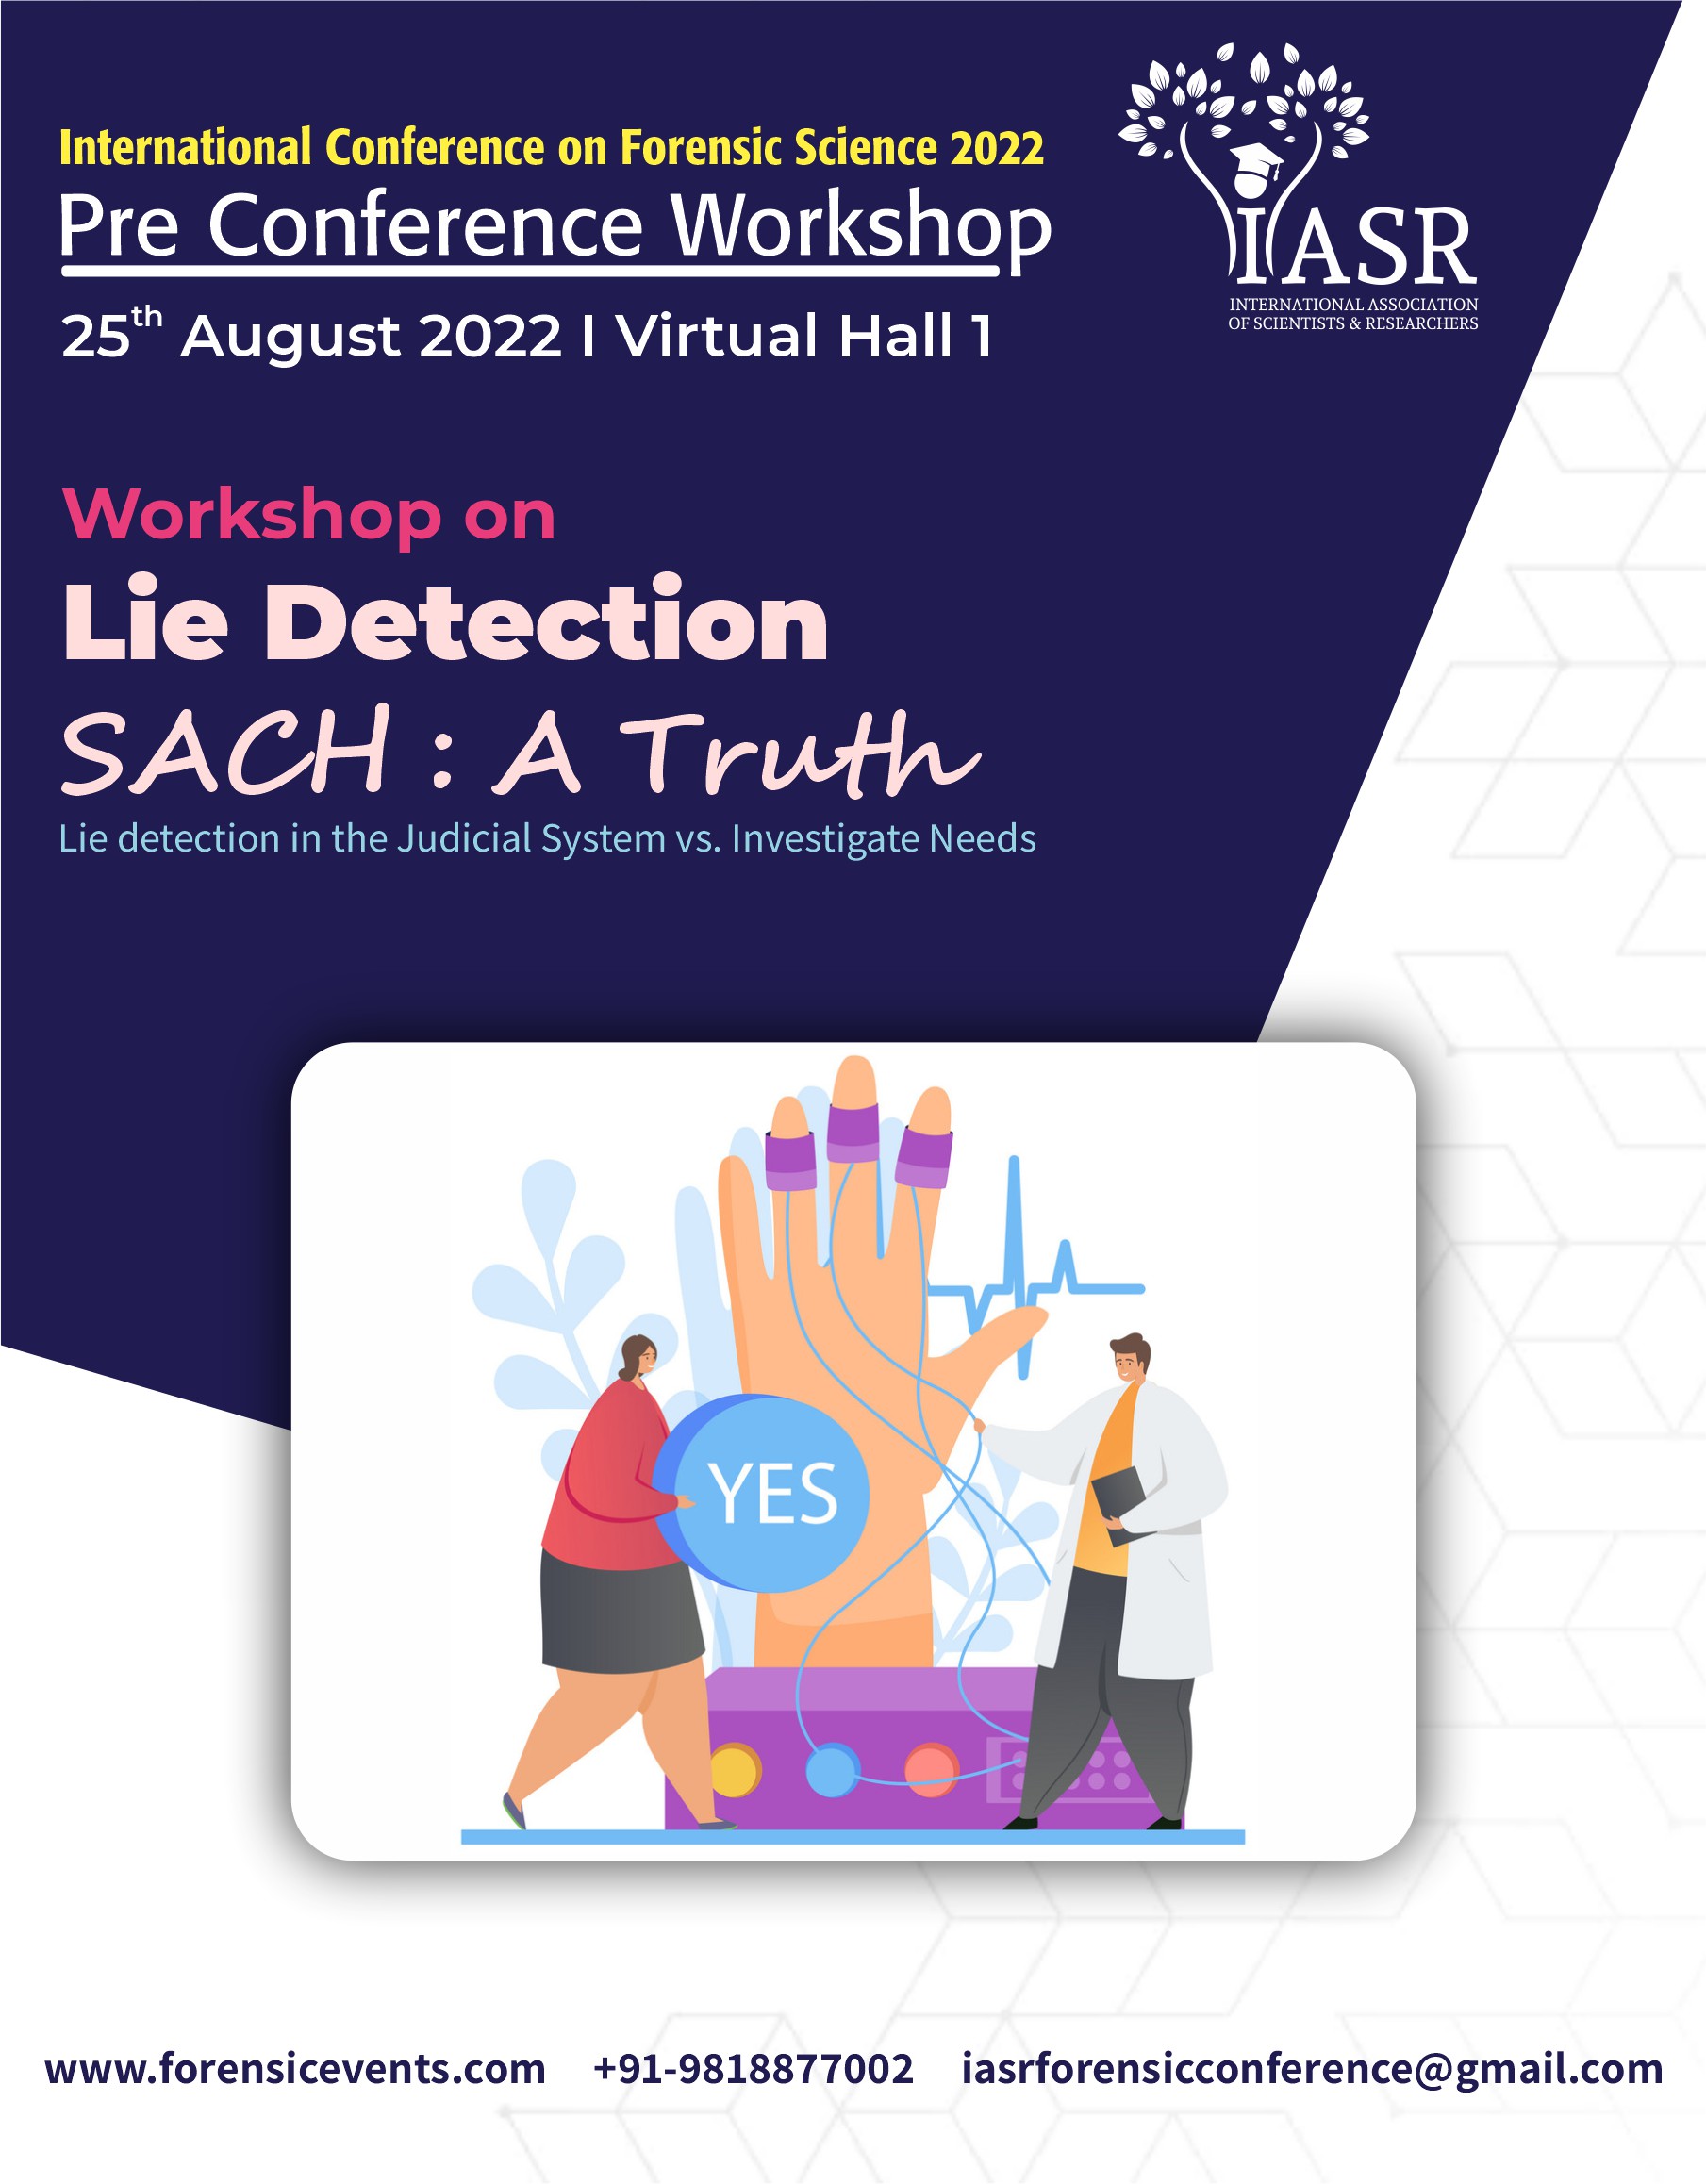 Lie Detection : Sach a Truth